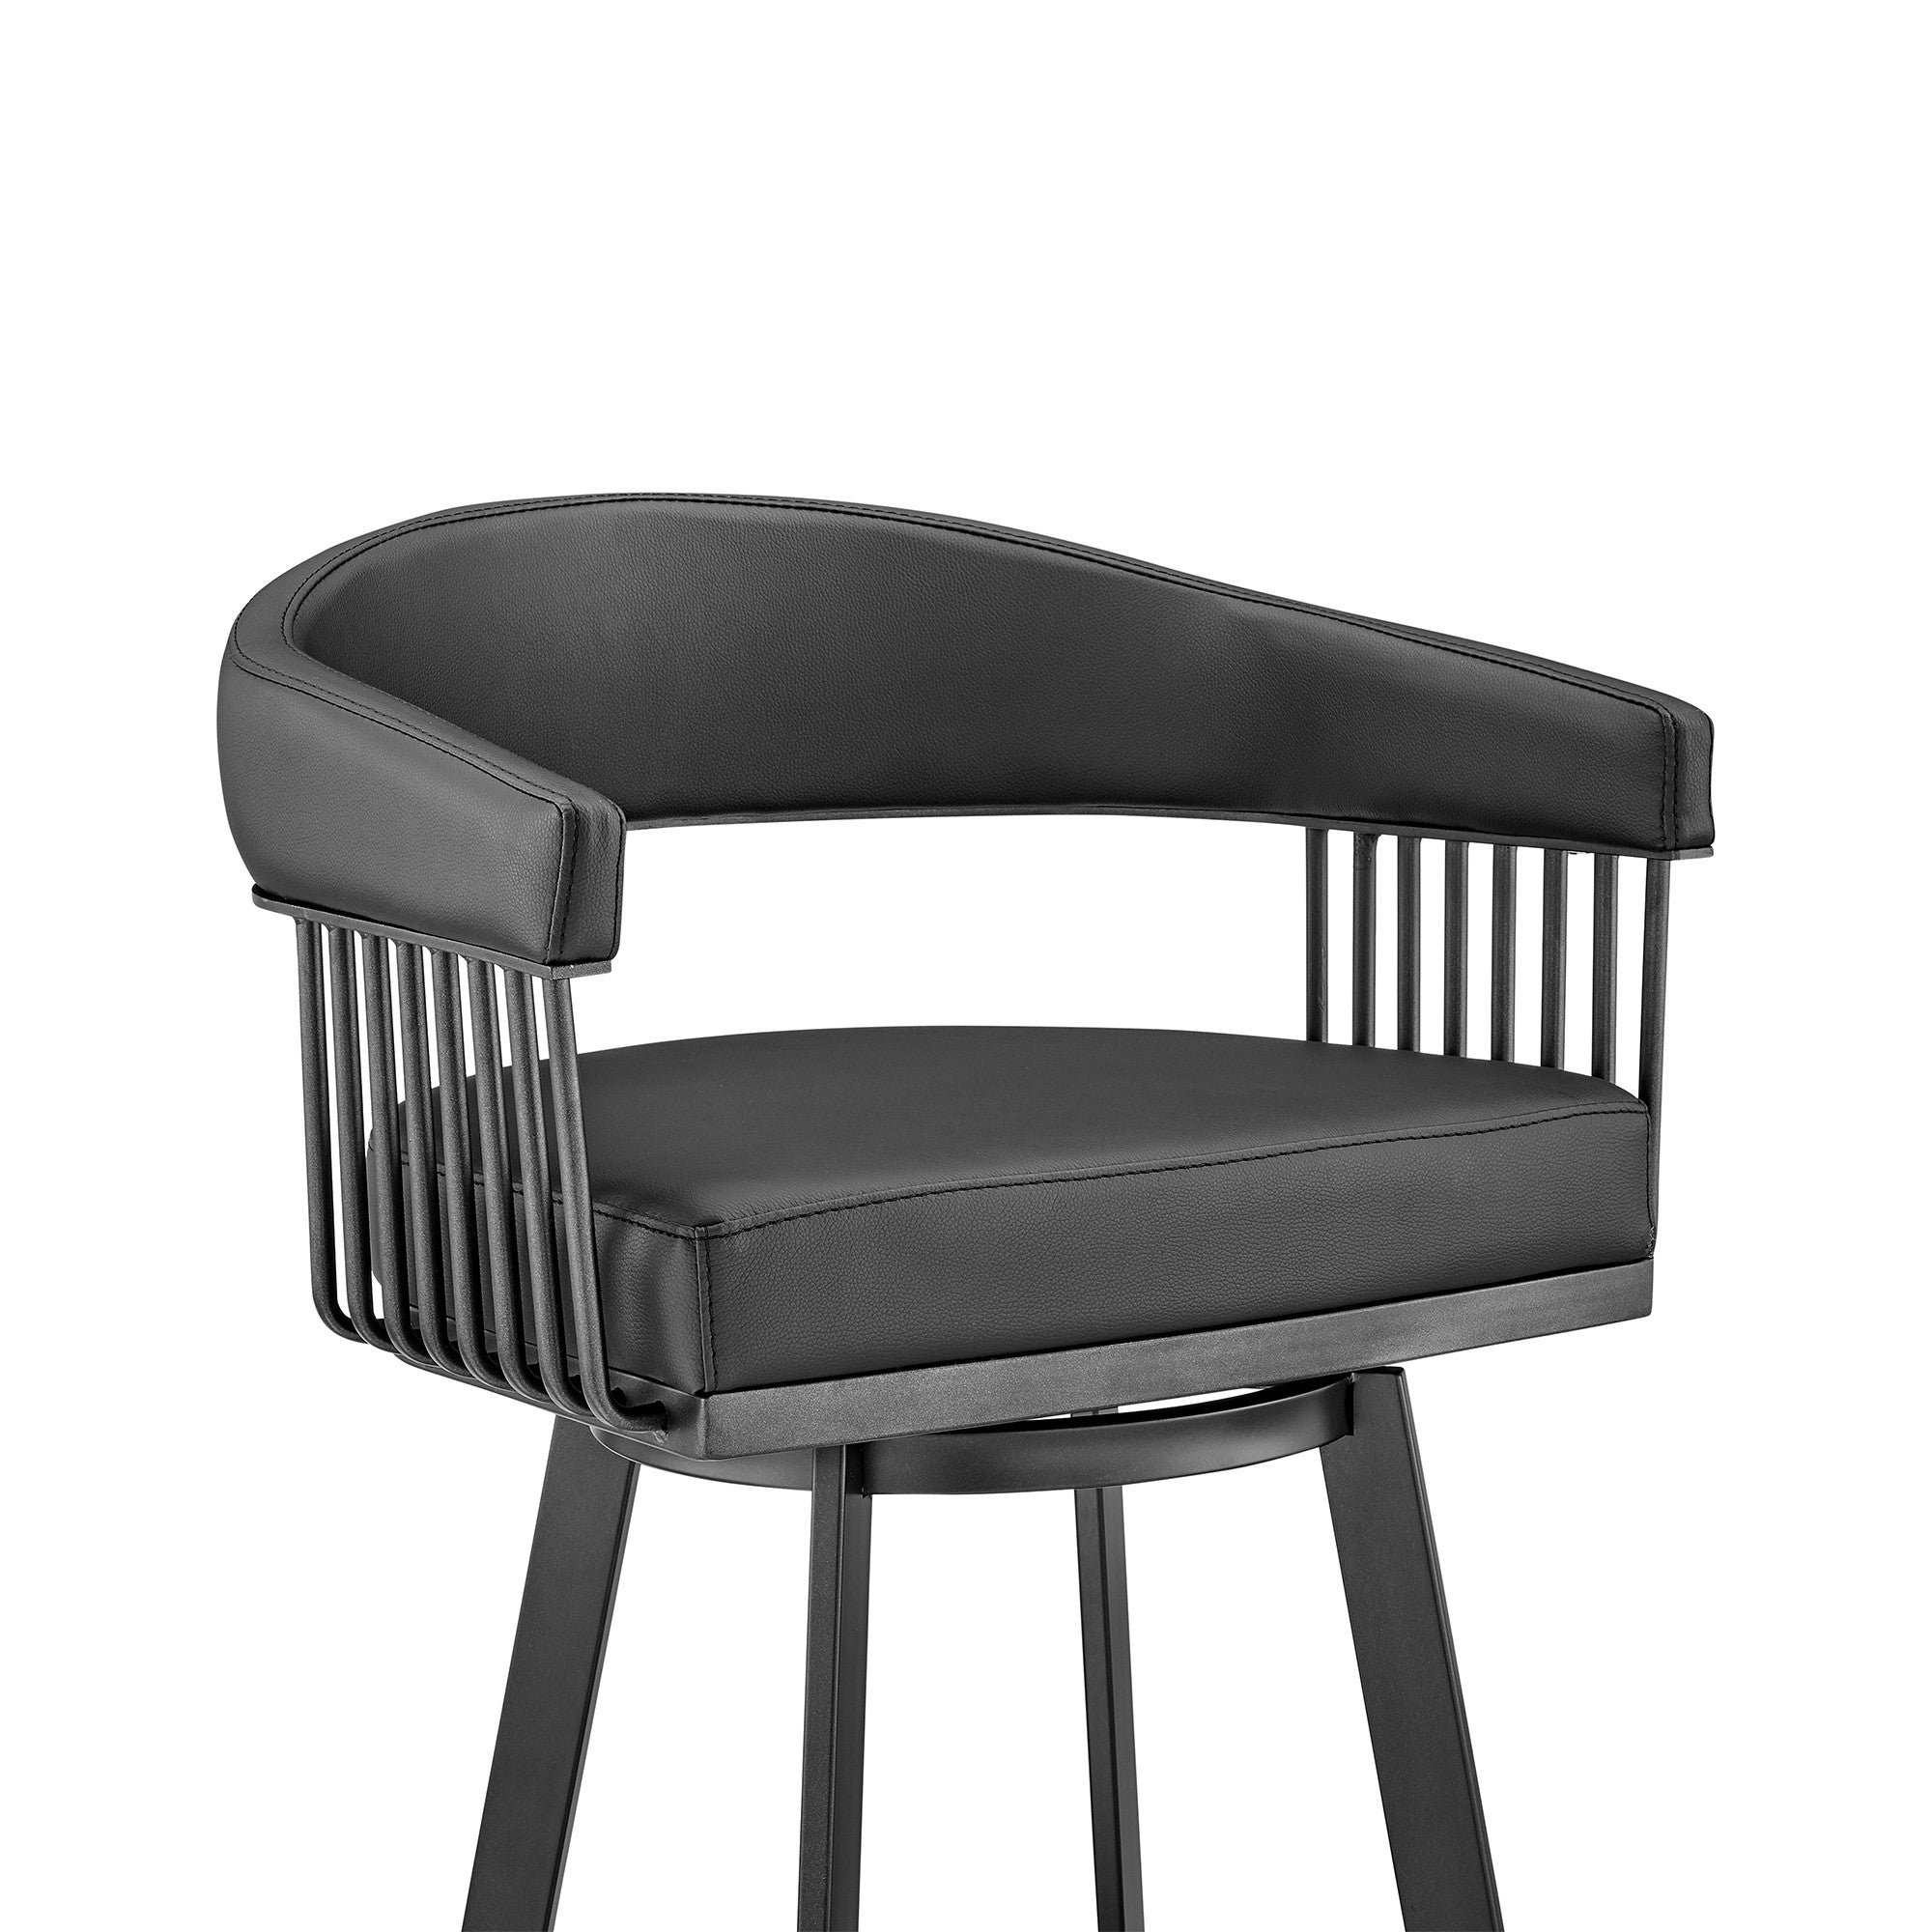 29" Black Iron Swivel Low Back Bar Height Bar Chair